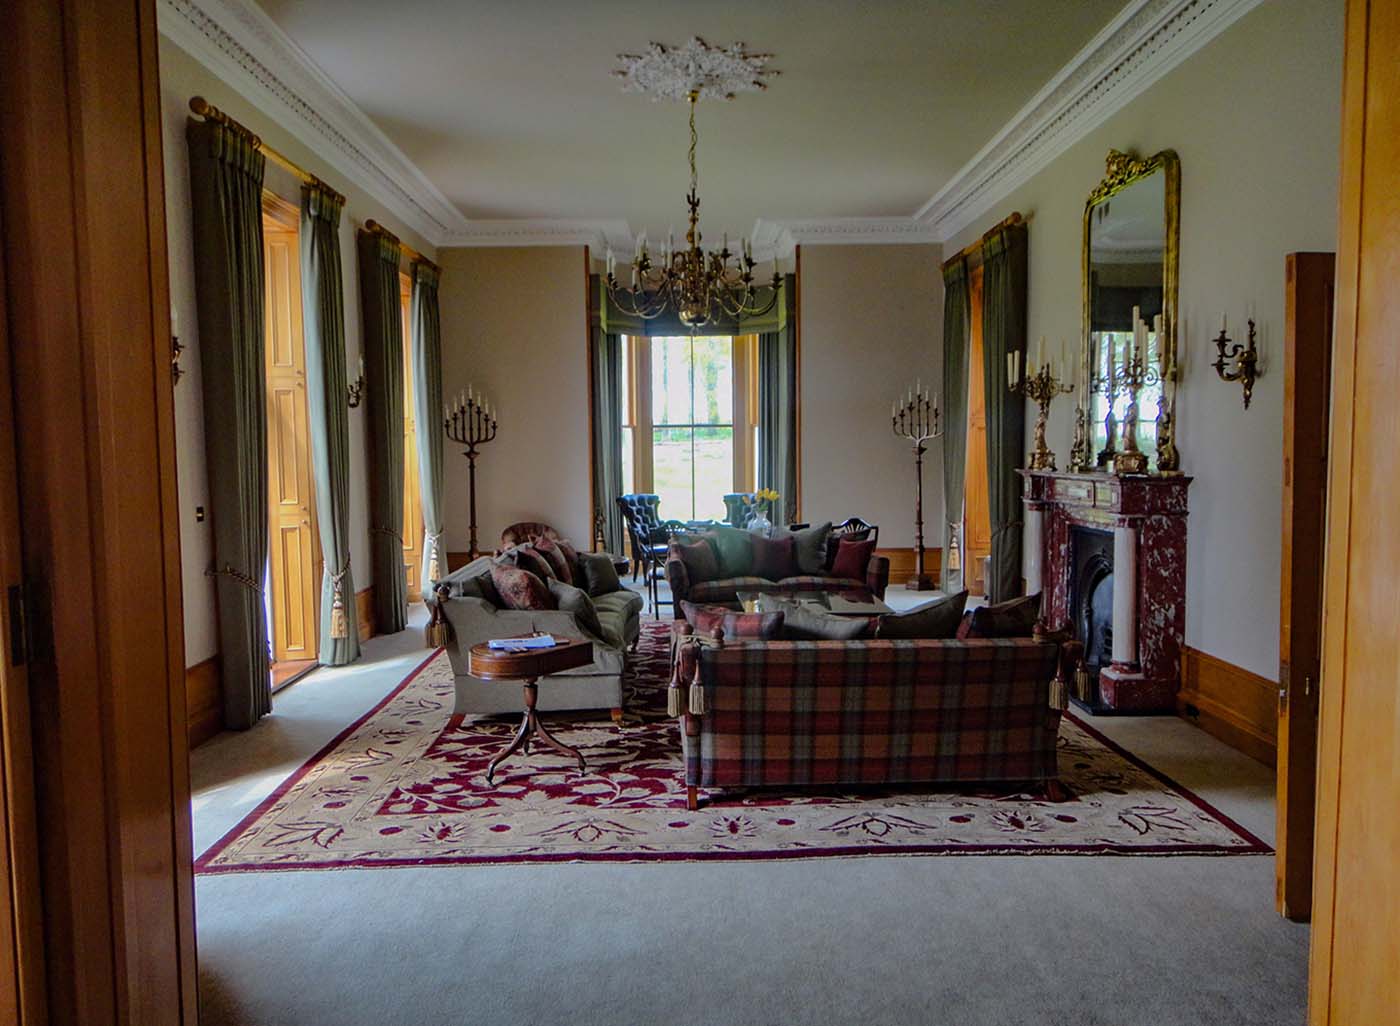 Lounge interiro showing large windows, fireplace, sofa, chairs and rug